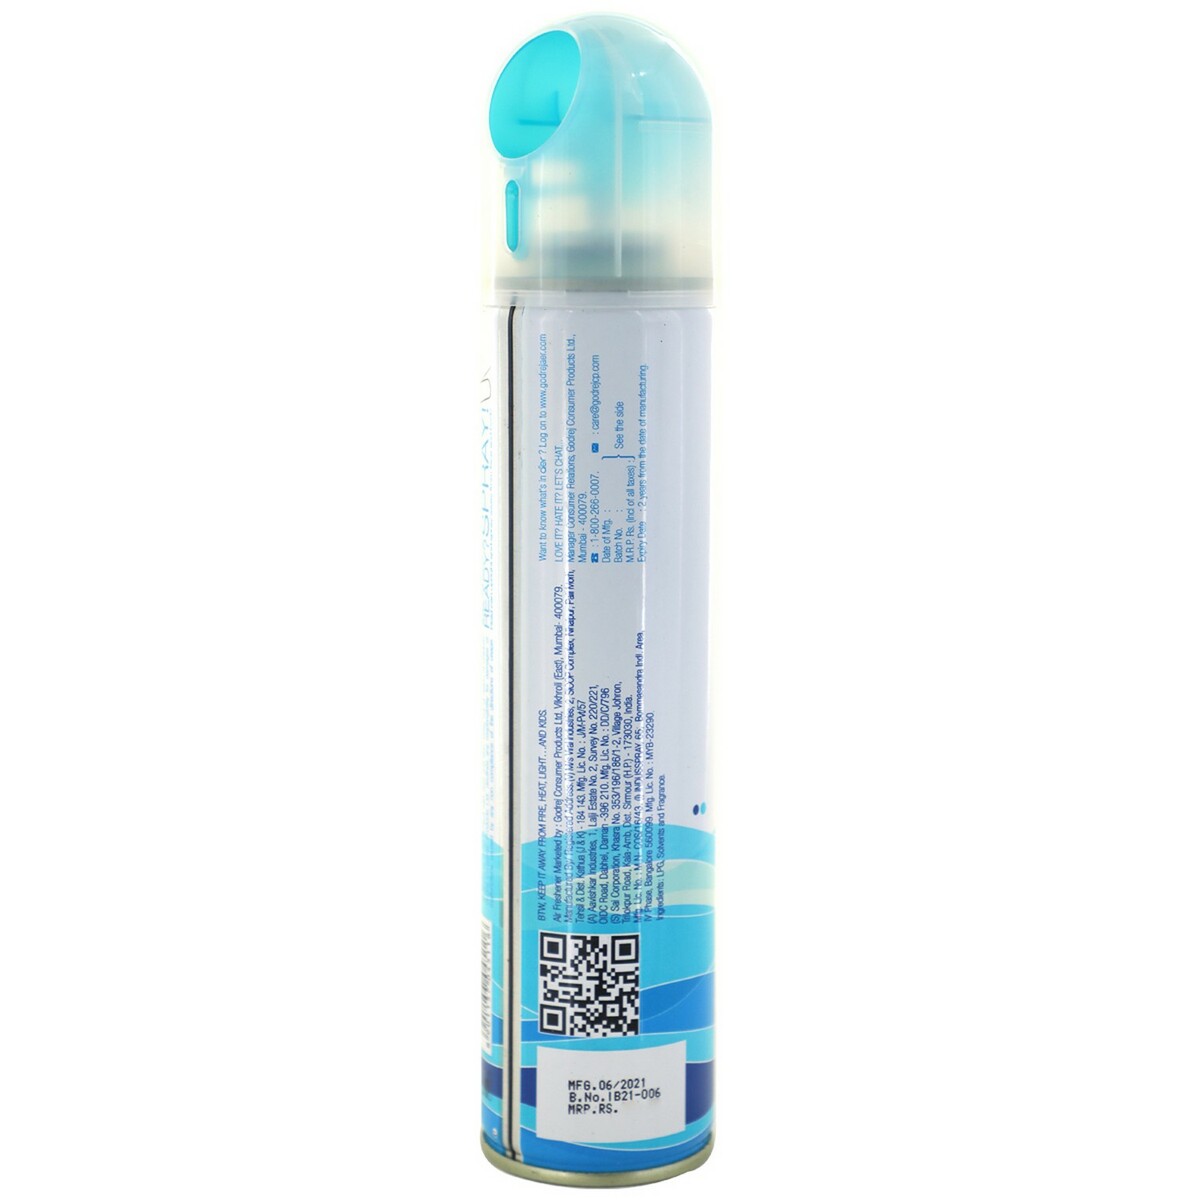 Godrej Aer Spray Air Freshener- Cool Surf Blue 220 ml